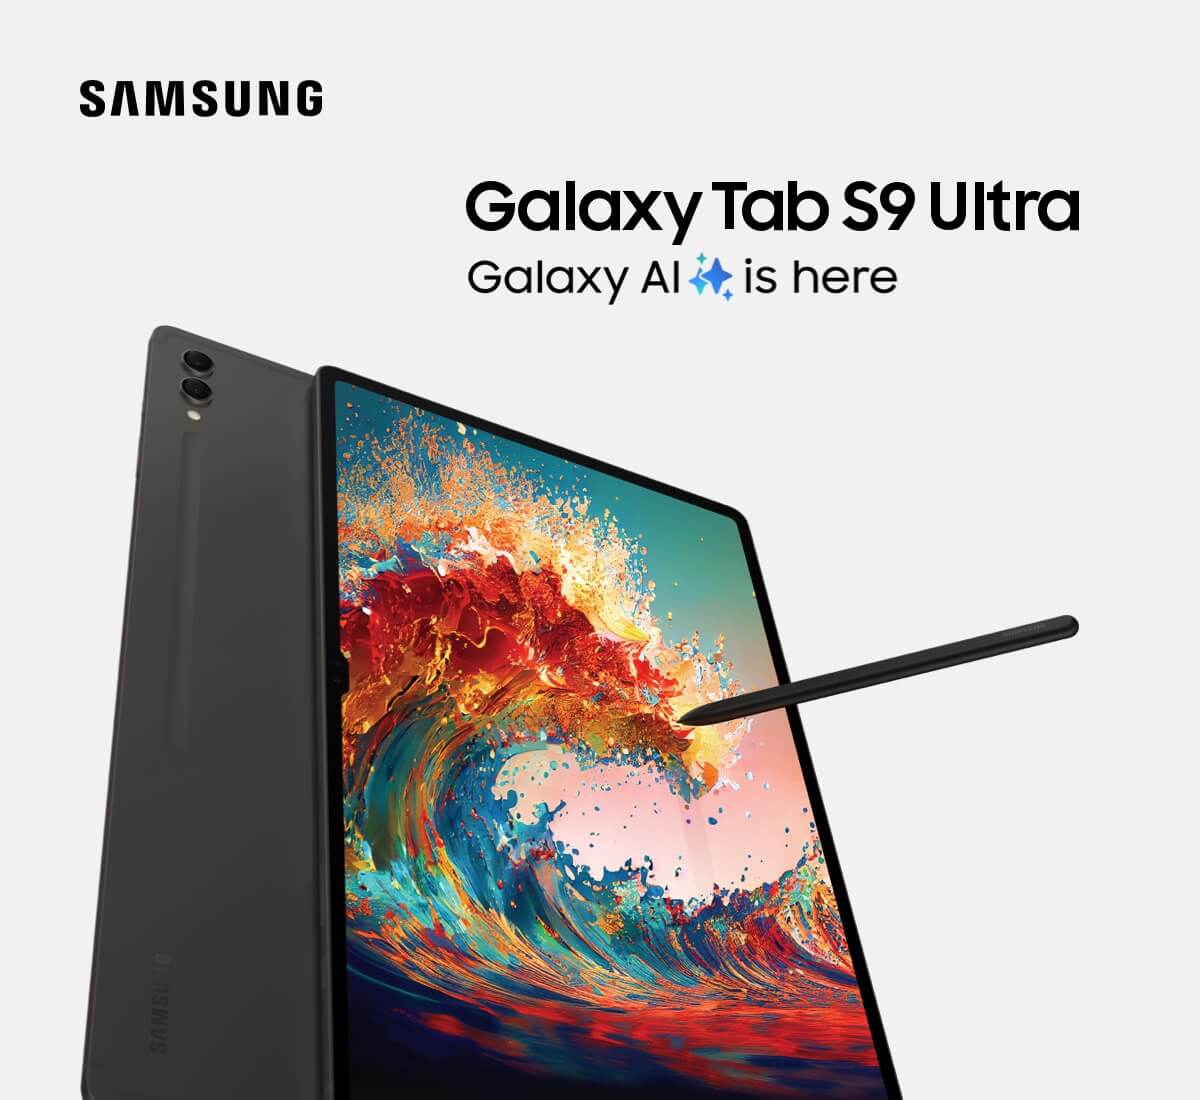 Samsung. The new Galaxy Tab S9 Ultra